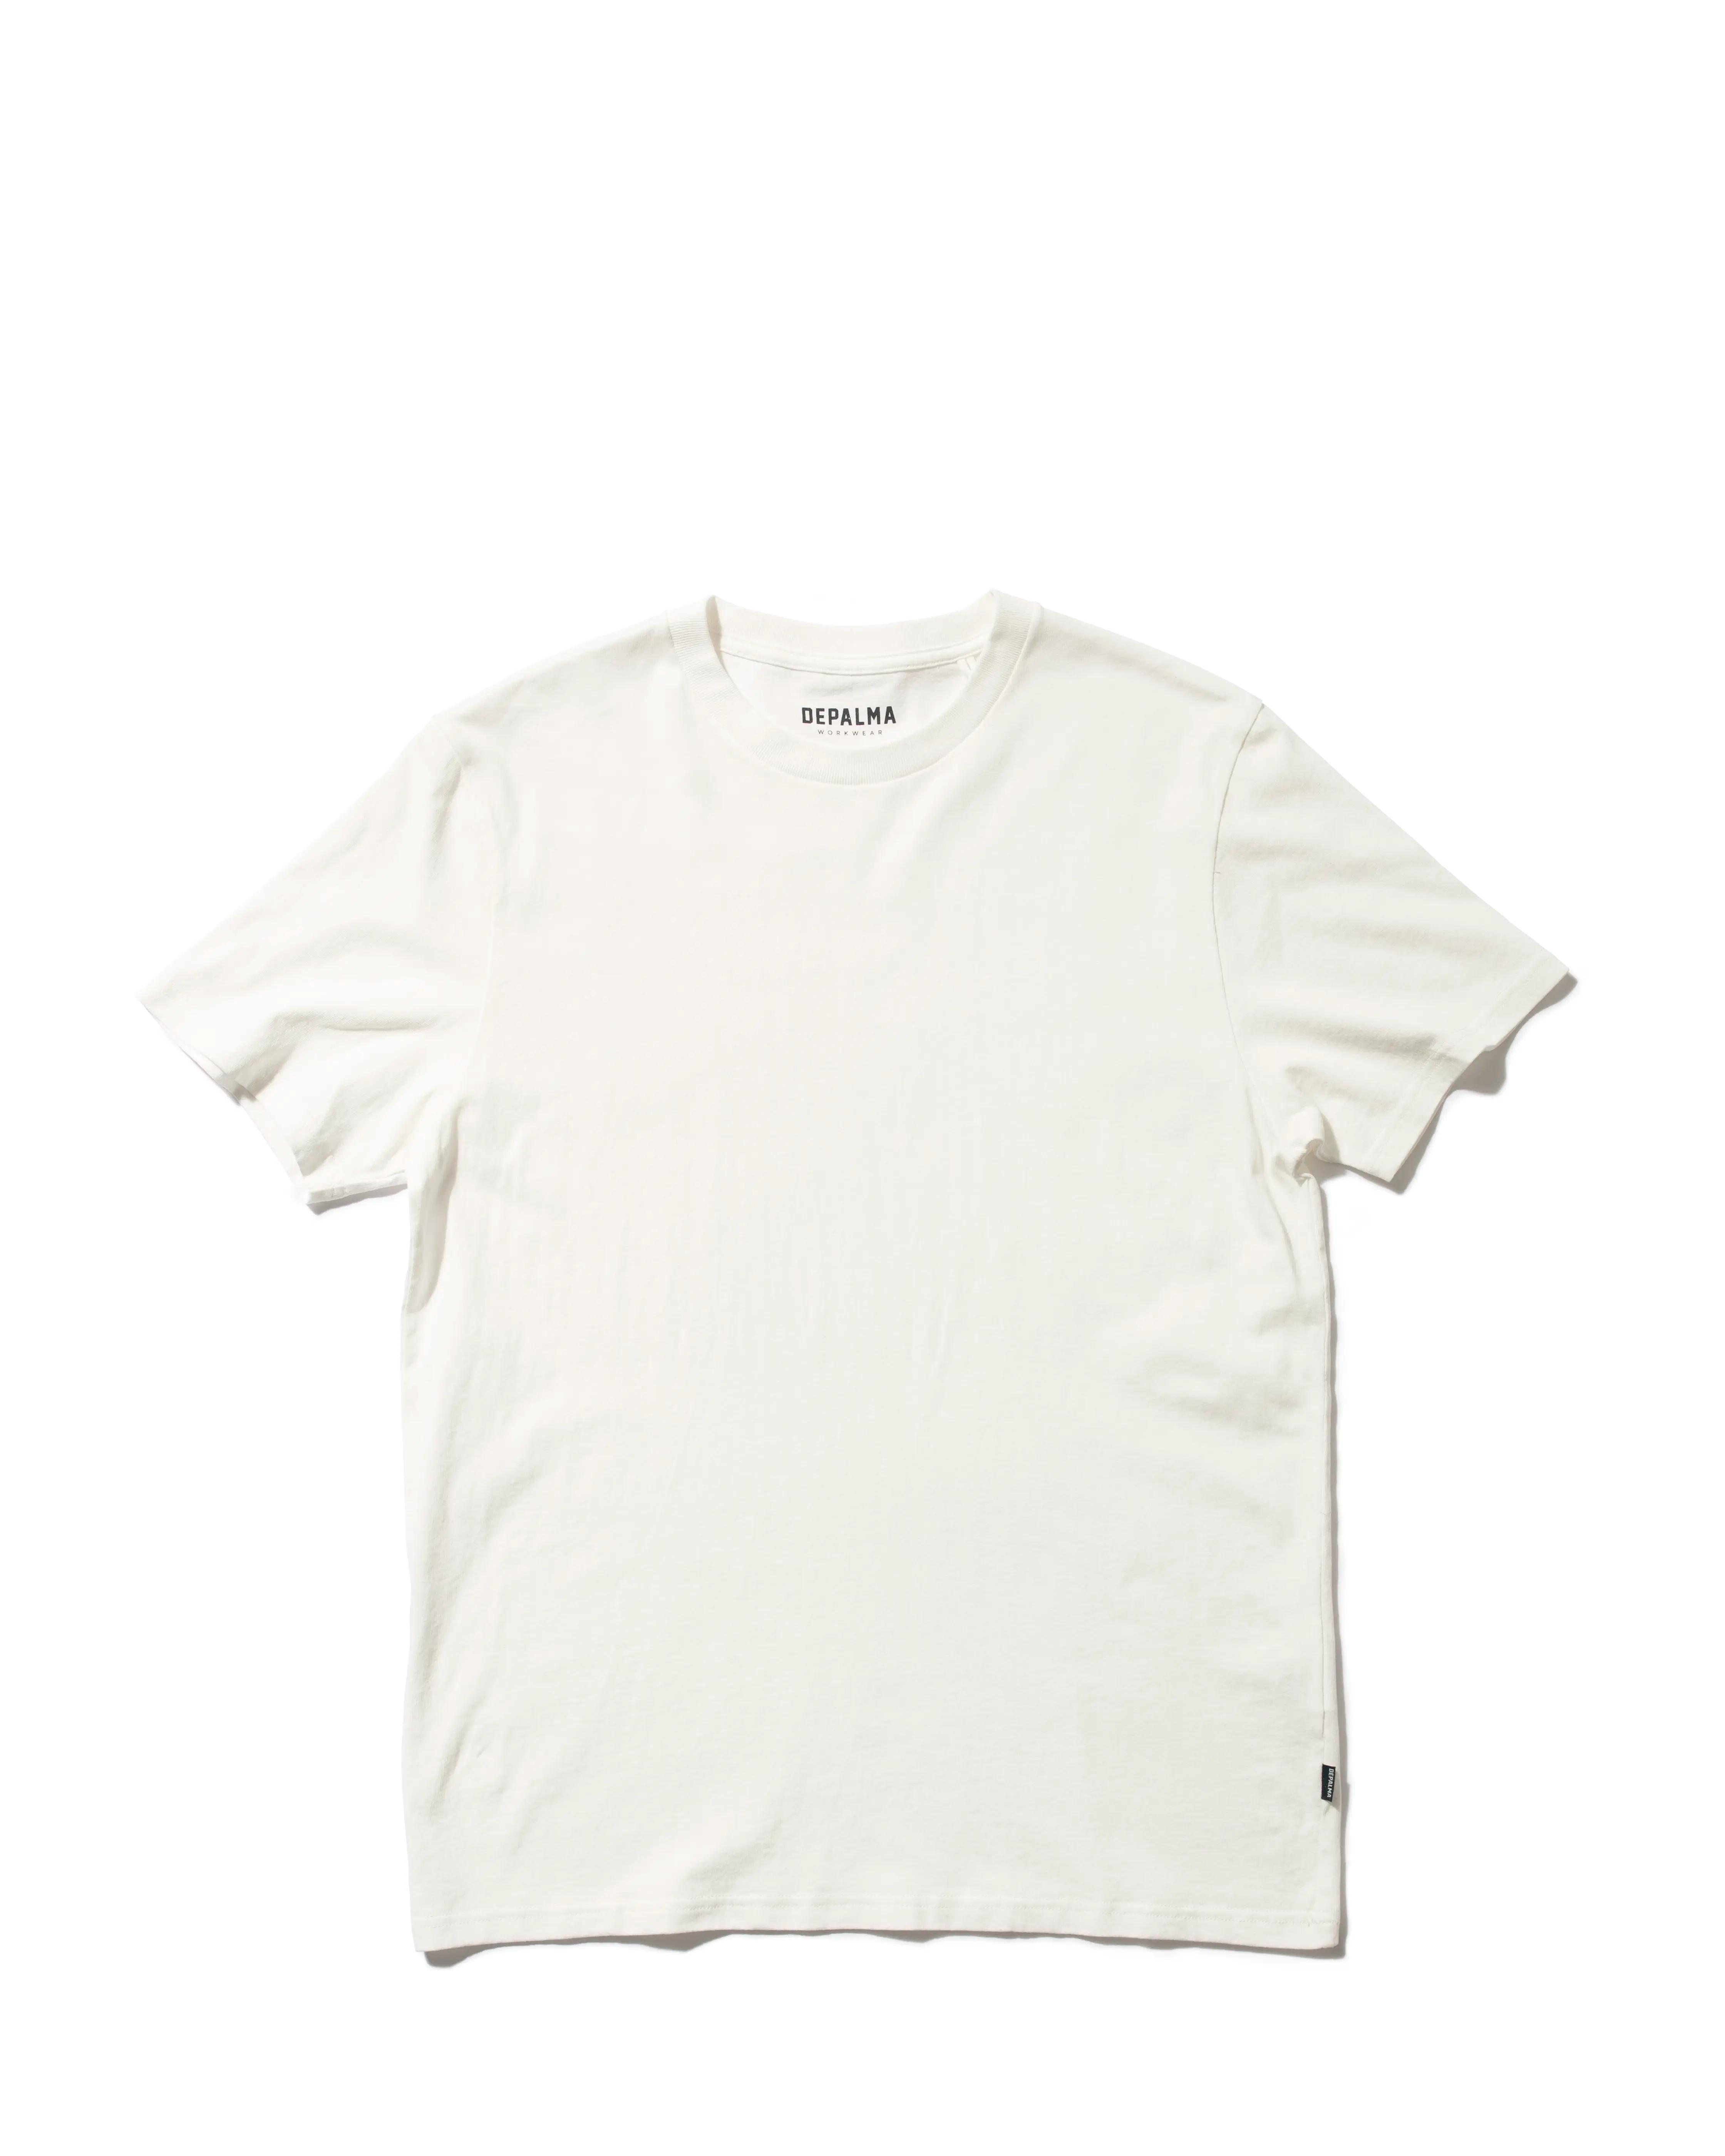 Photo of Profile S/S T-shirt, White